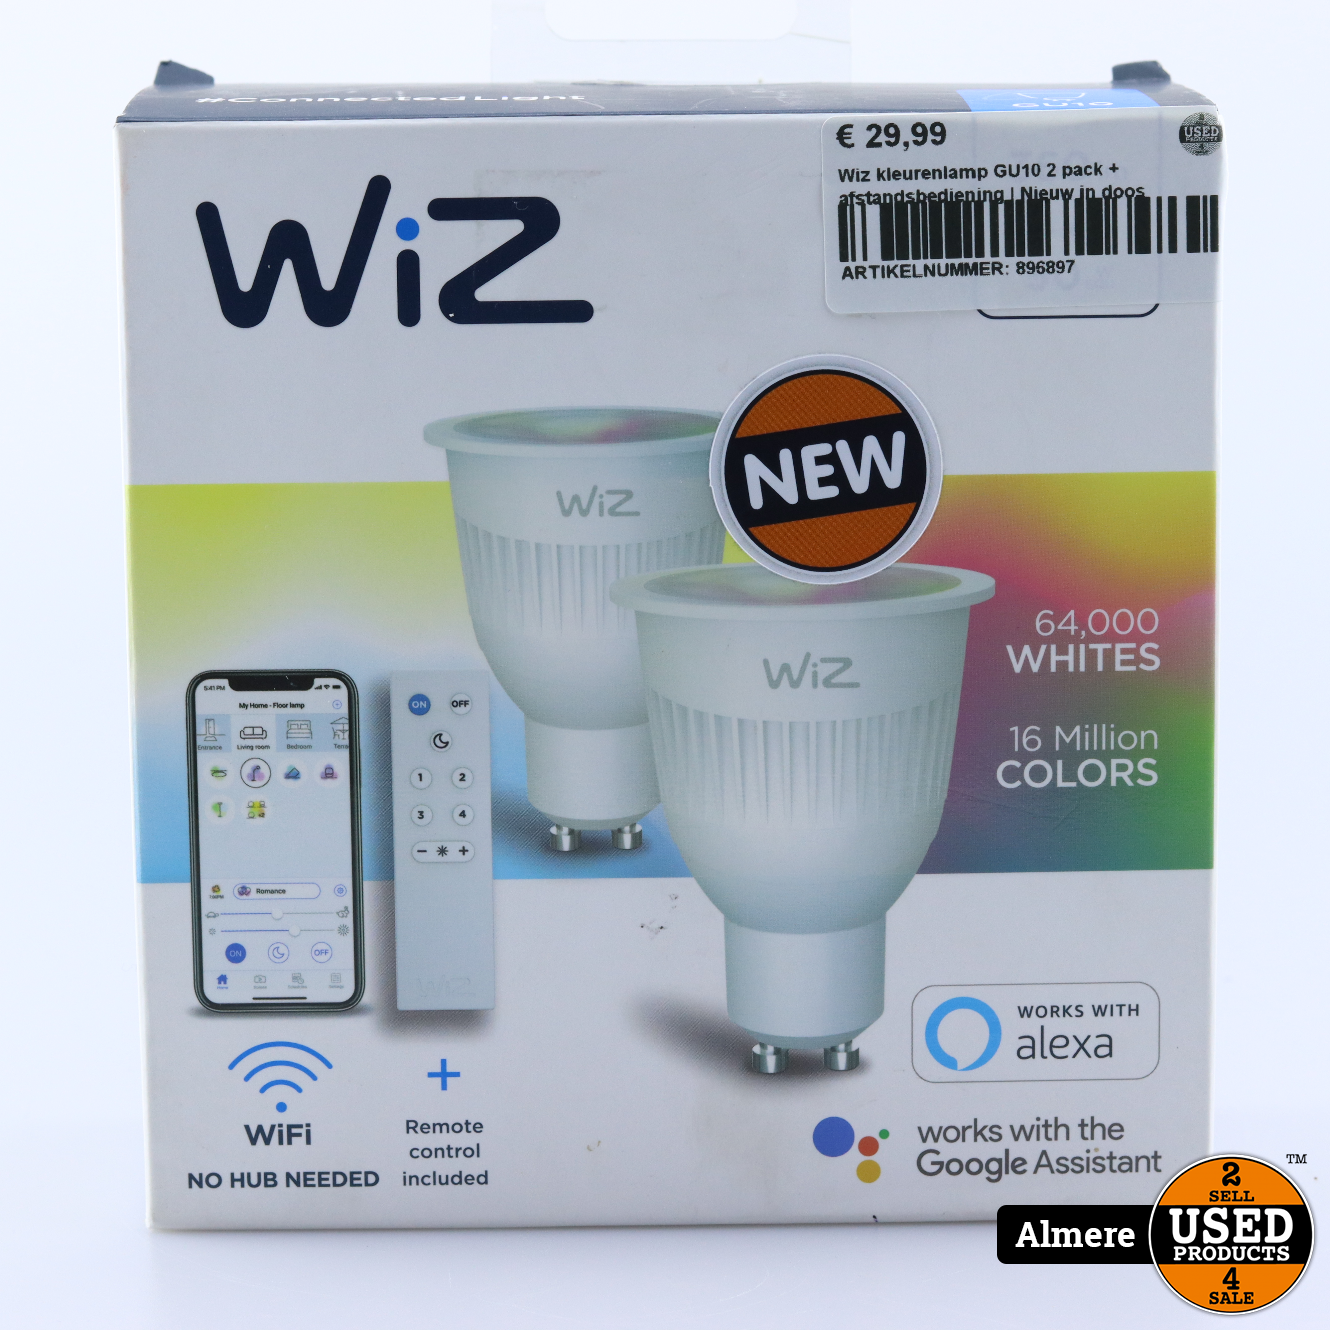 hulp terrorist samenwerken Wiz kleurenlamp GU10 2 pack + afstandsbediening | Nieuw in doos - Used  Products Almere